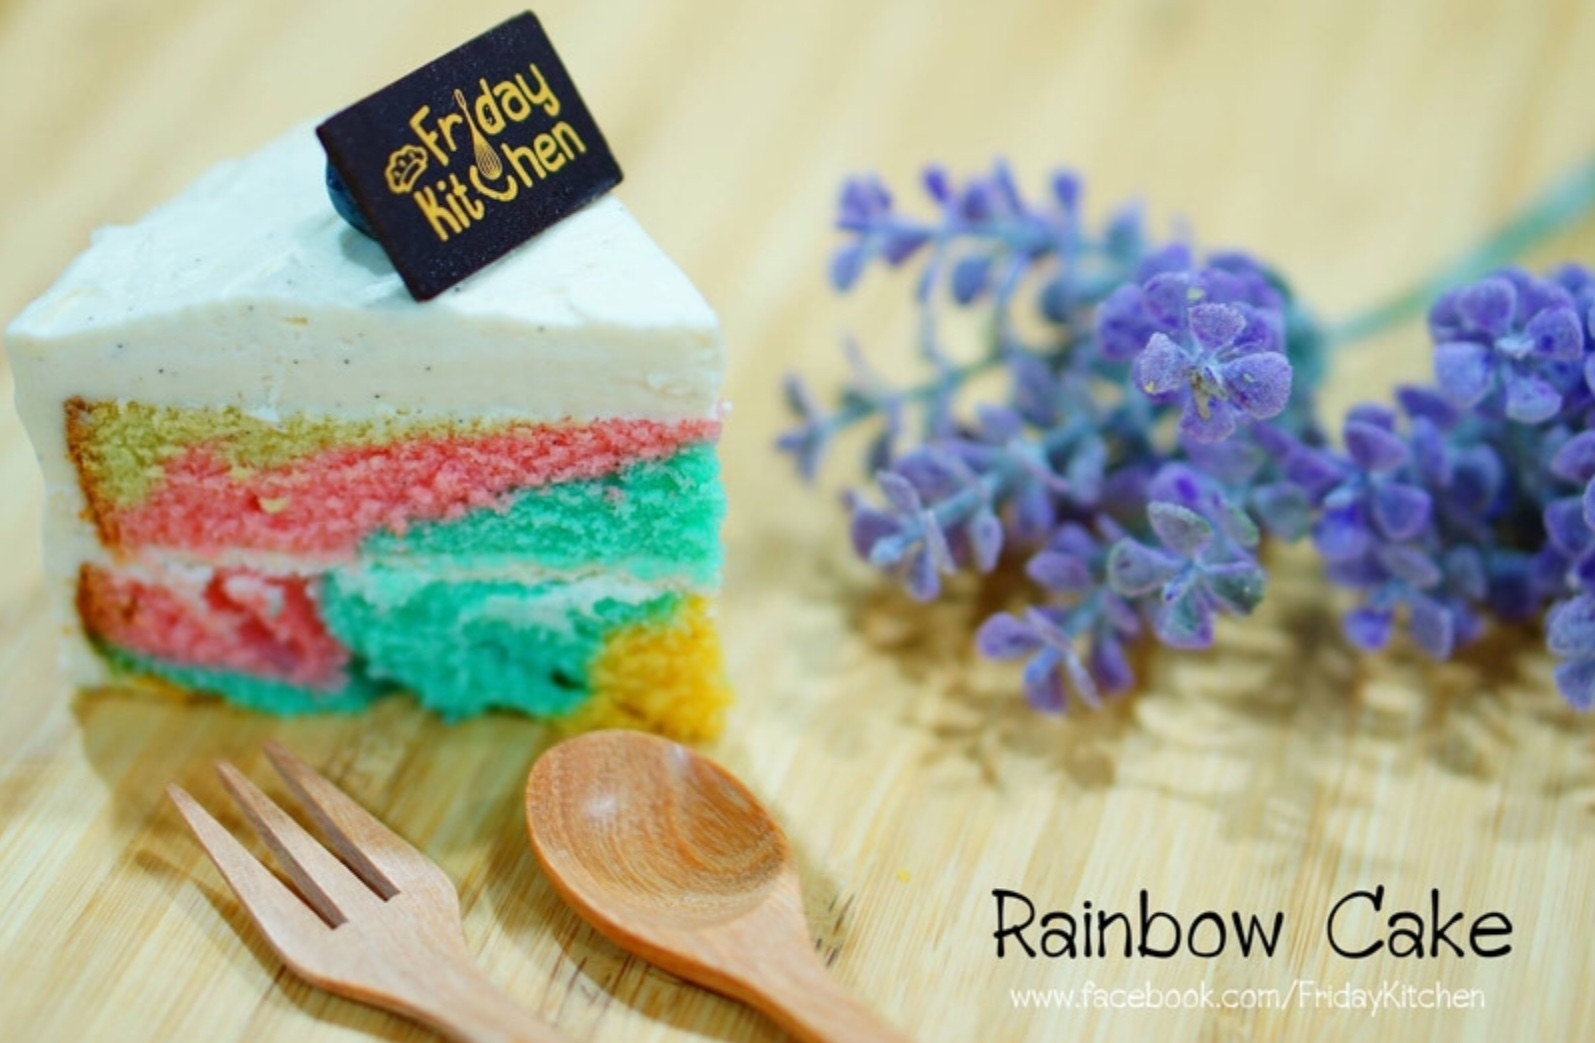 Ovaltine Ferrero Praline Cake, Cookie & Cream Cake, Rainbow Cake 